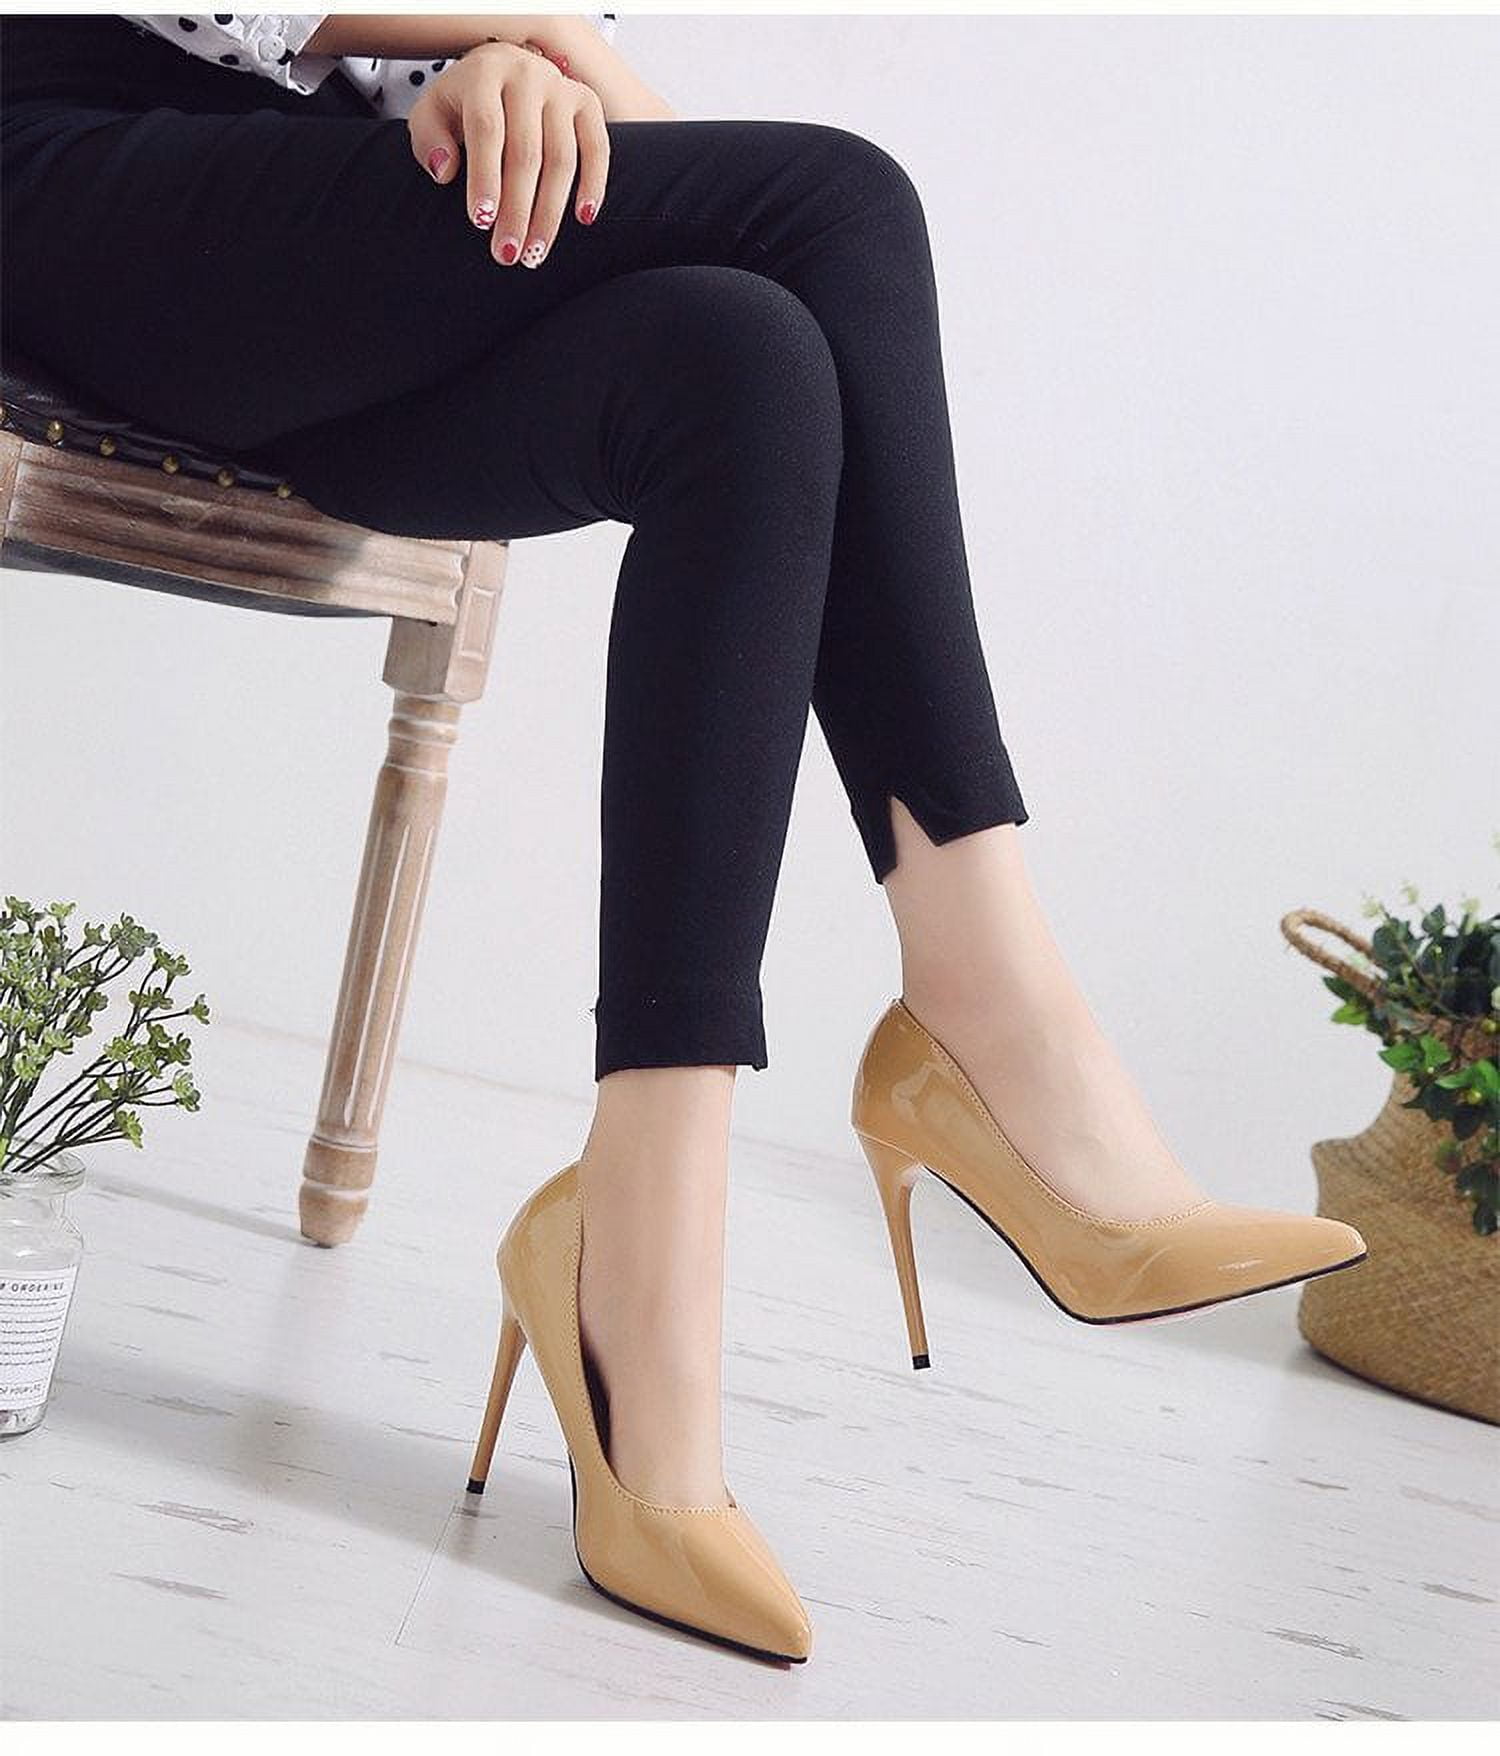 STYLZREPUBLIC Women's 4 Inch Ankle Tie Stiletto Lace Up Heel : Amazon.in:  Fashion